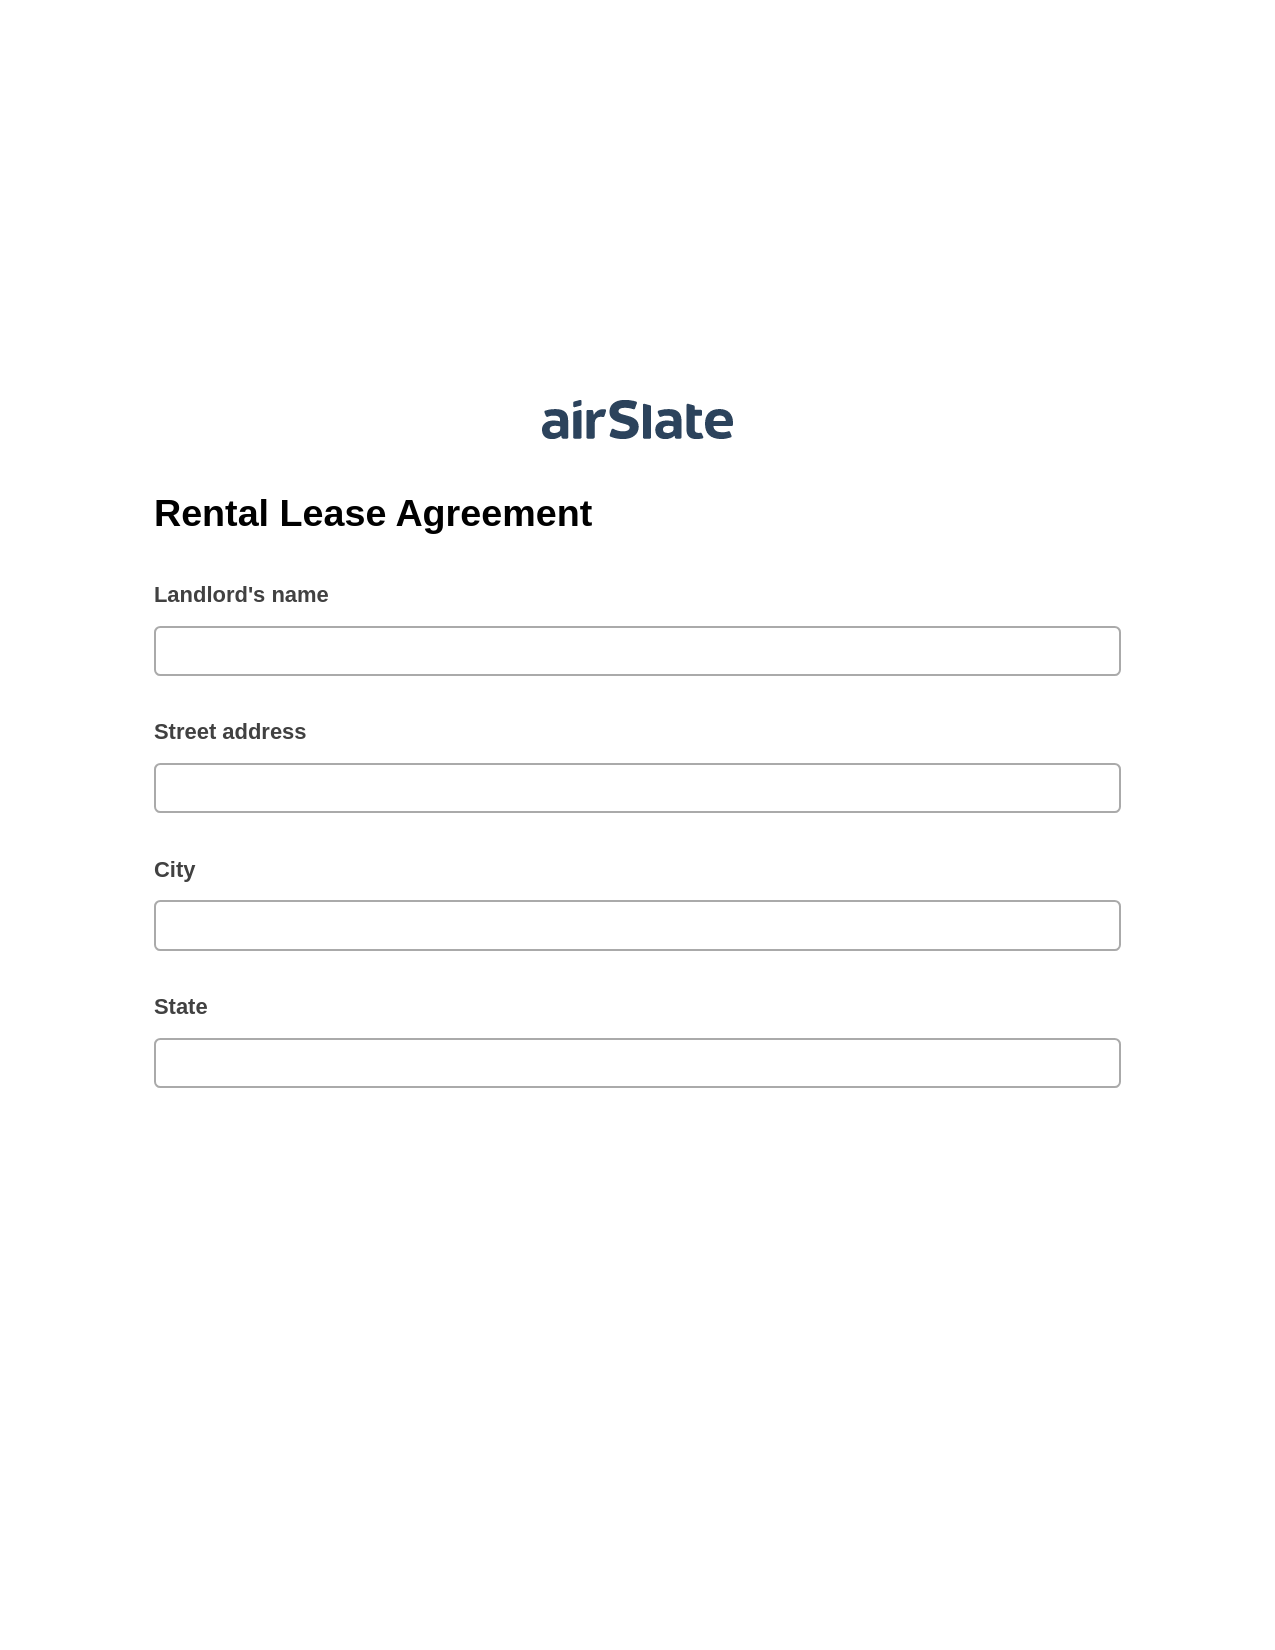 Rental Lease Agreement Pre-fill from Excel Spreadsheet Dropdown Options Bot, Google Cloud Print Bot, Webhook Postfinish Bot